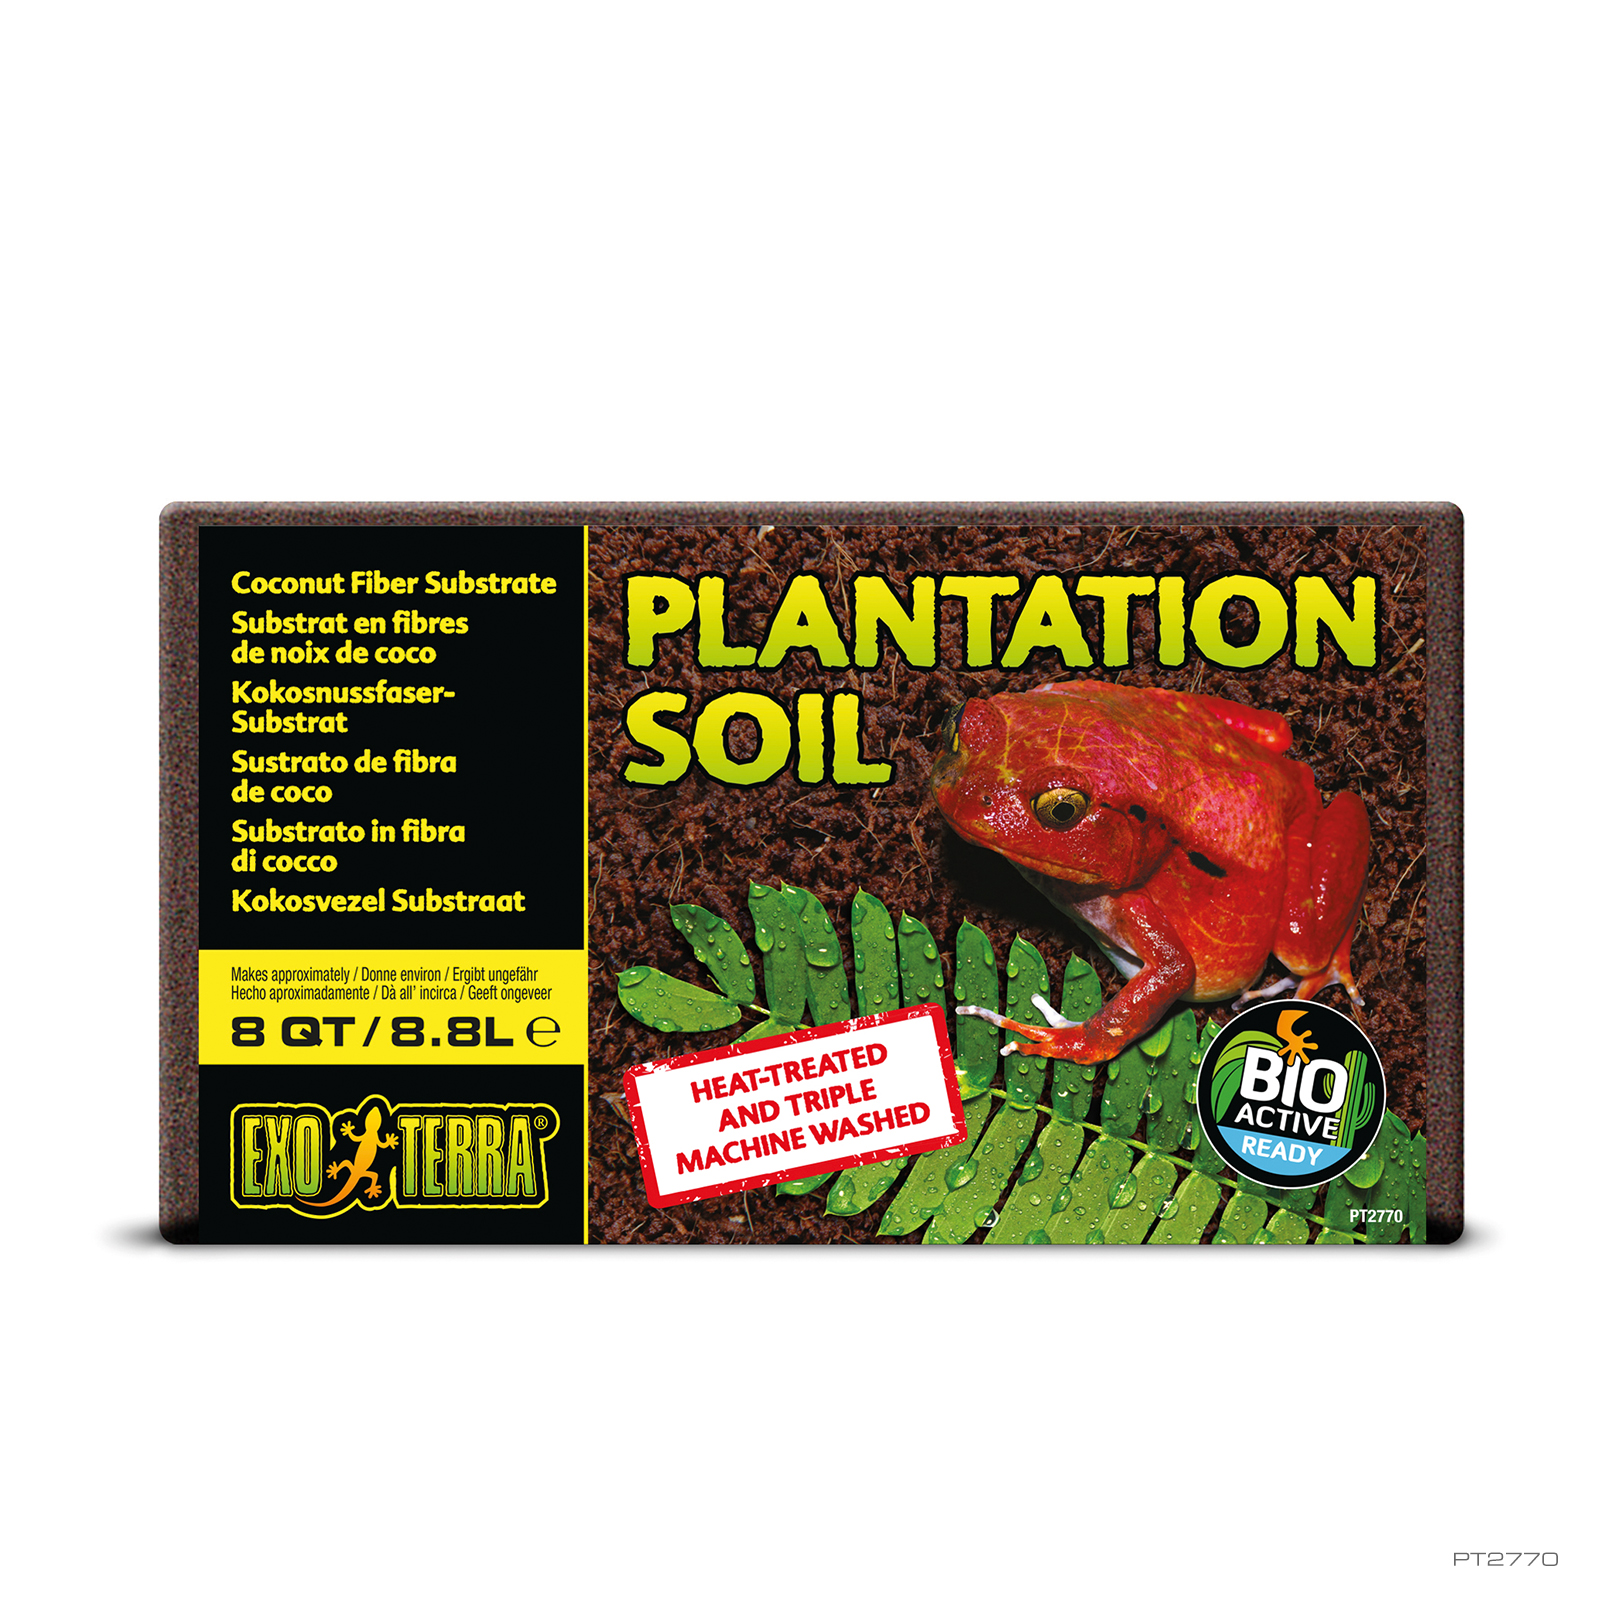 Plantation Soil Brick 8QT - 8,8L